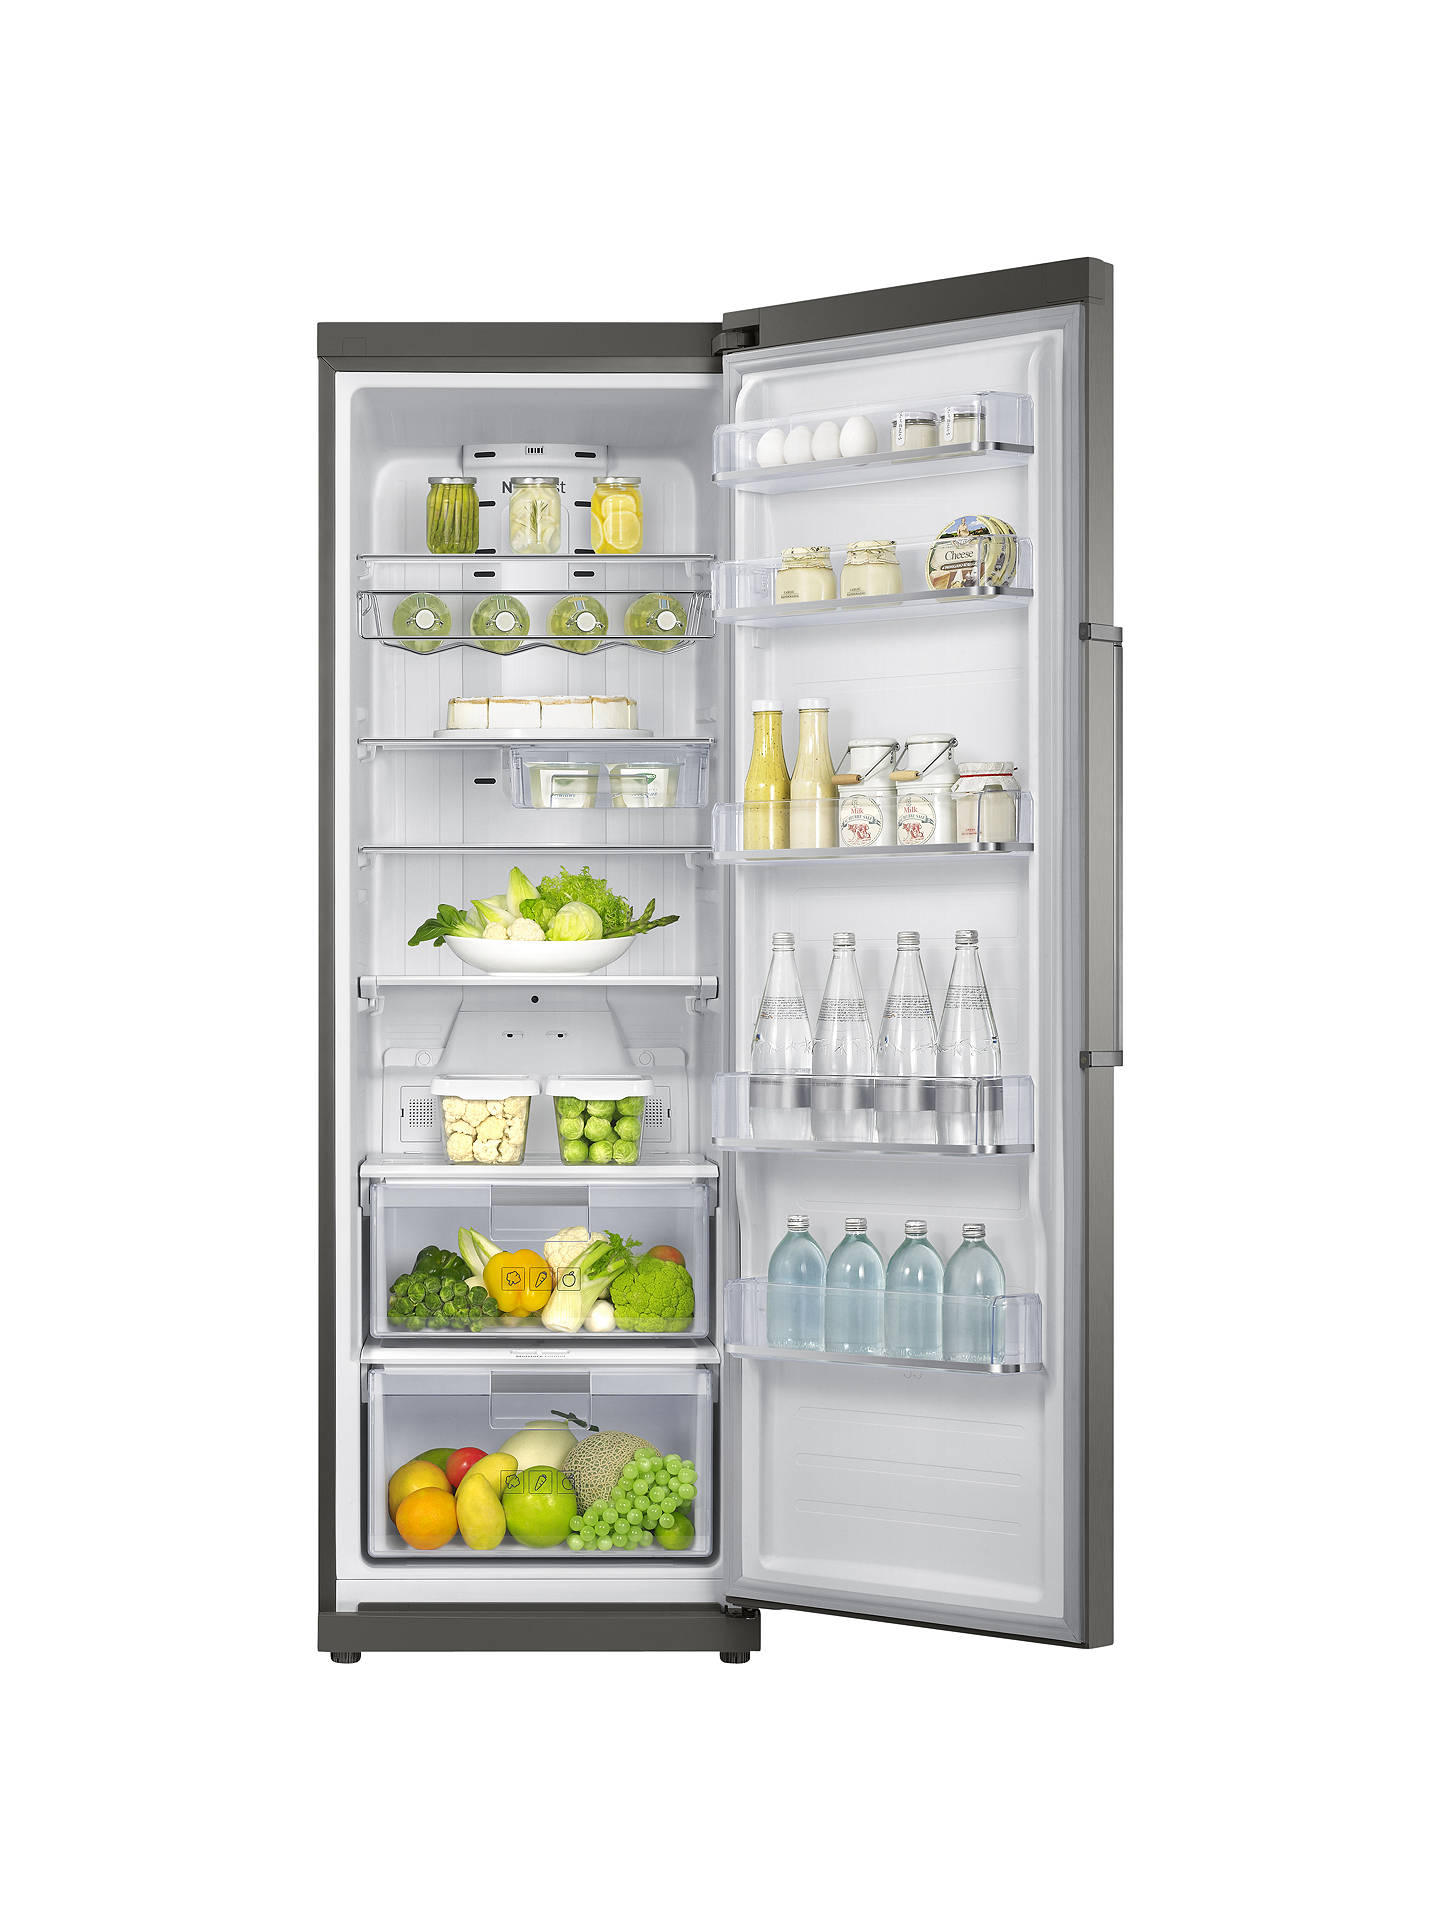 Атлант без морозилки. Холодильник Samsung RR-35h61507f. Холодильник самсунг однокамерный. Холодильник LG однокамерный 180. Samsung Silver Nano холодильник.